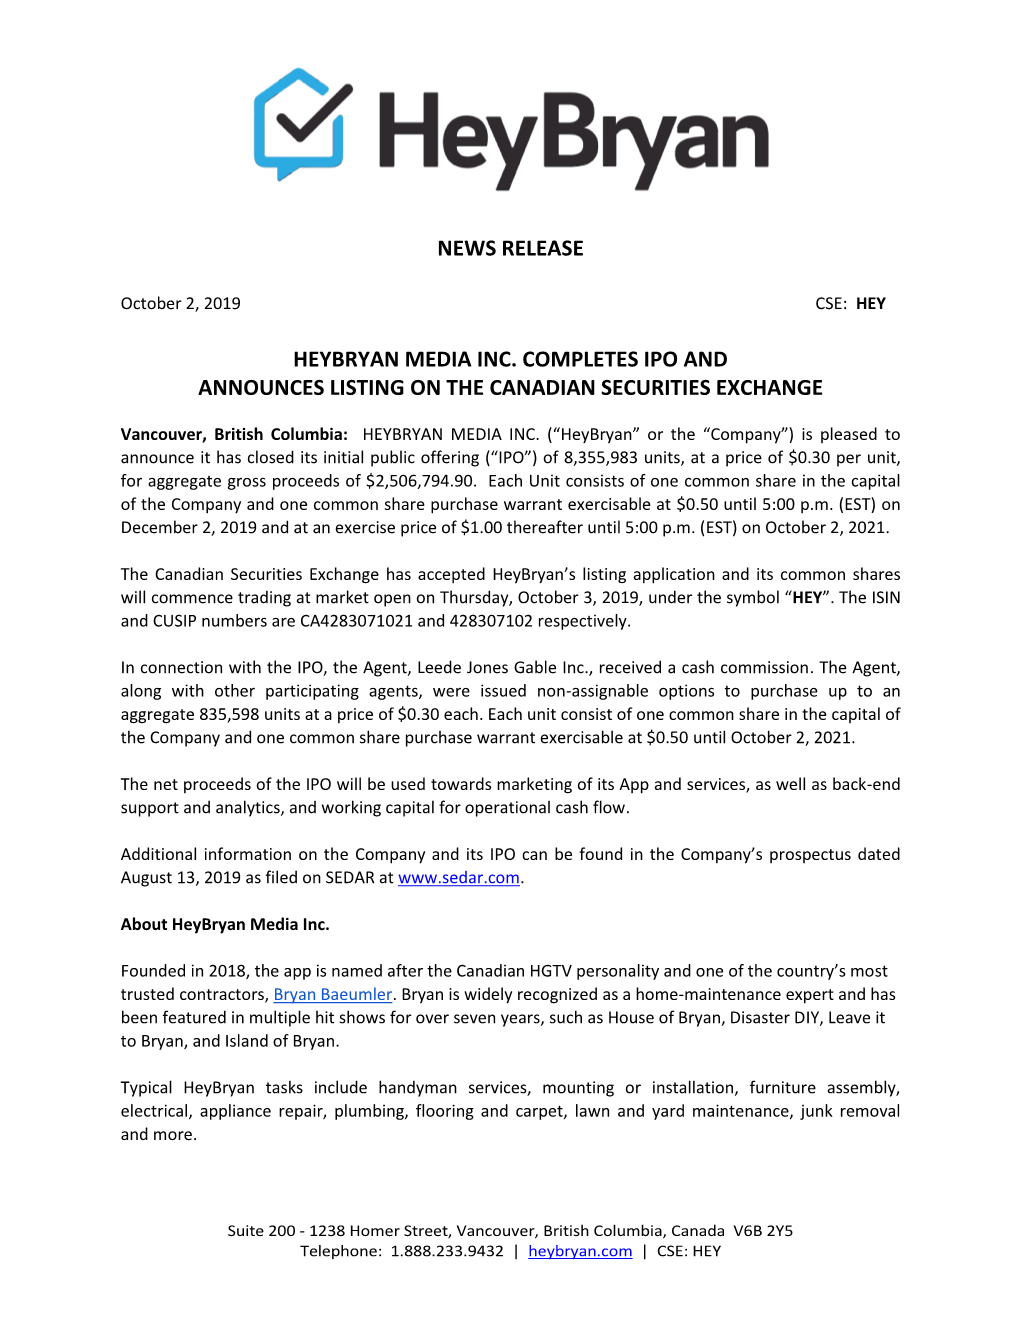 Heybryan Final Press Release